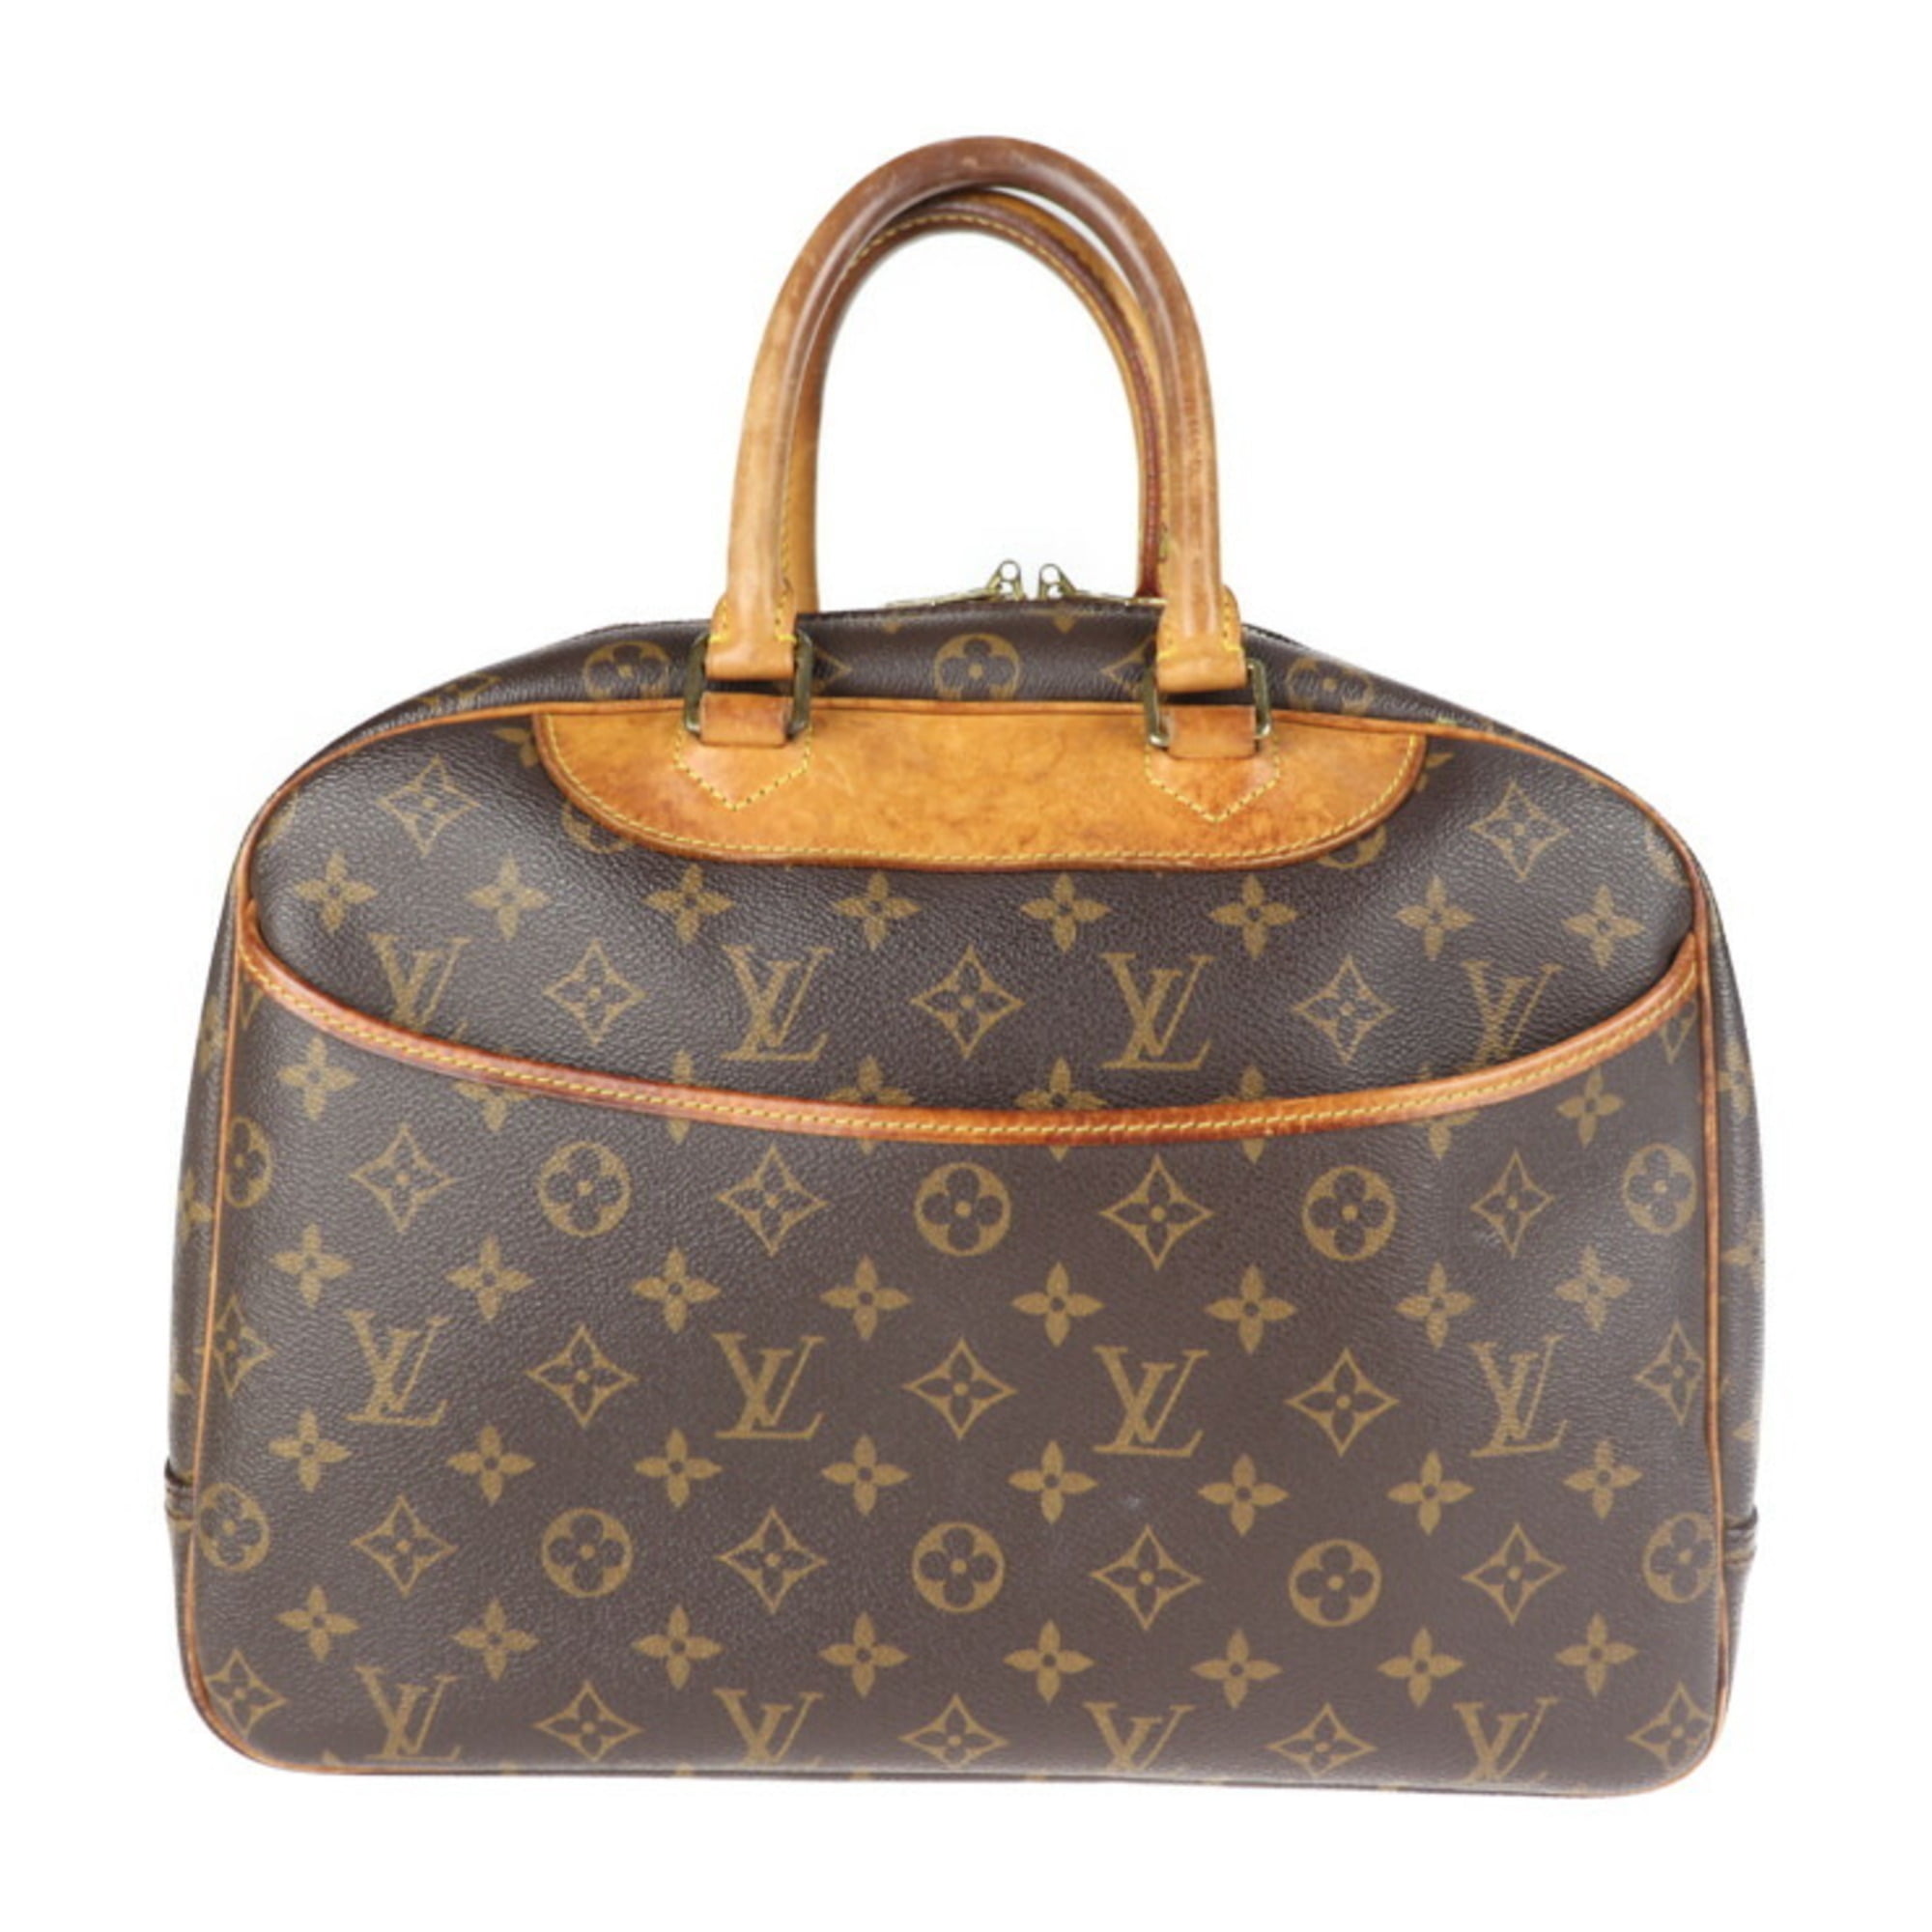 Louis Vuitton Deauville Handbag